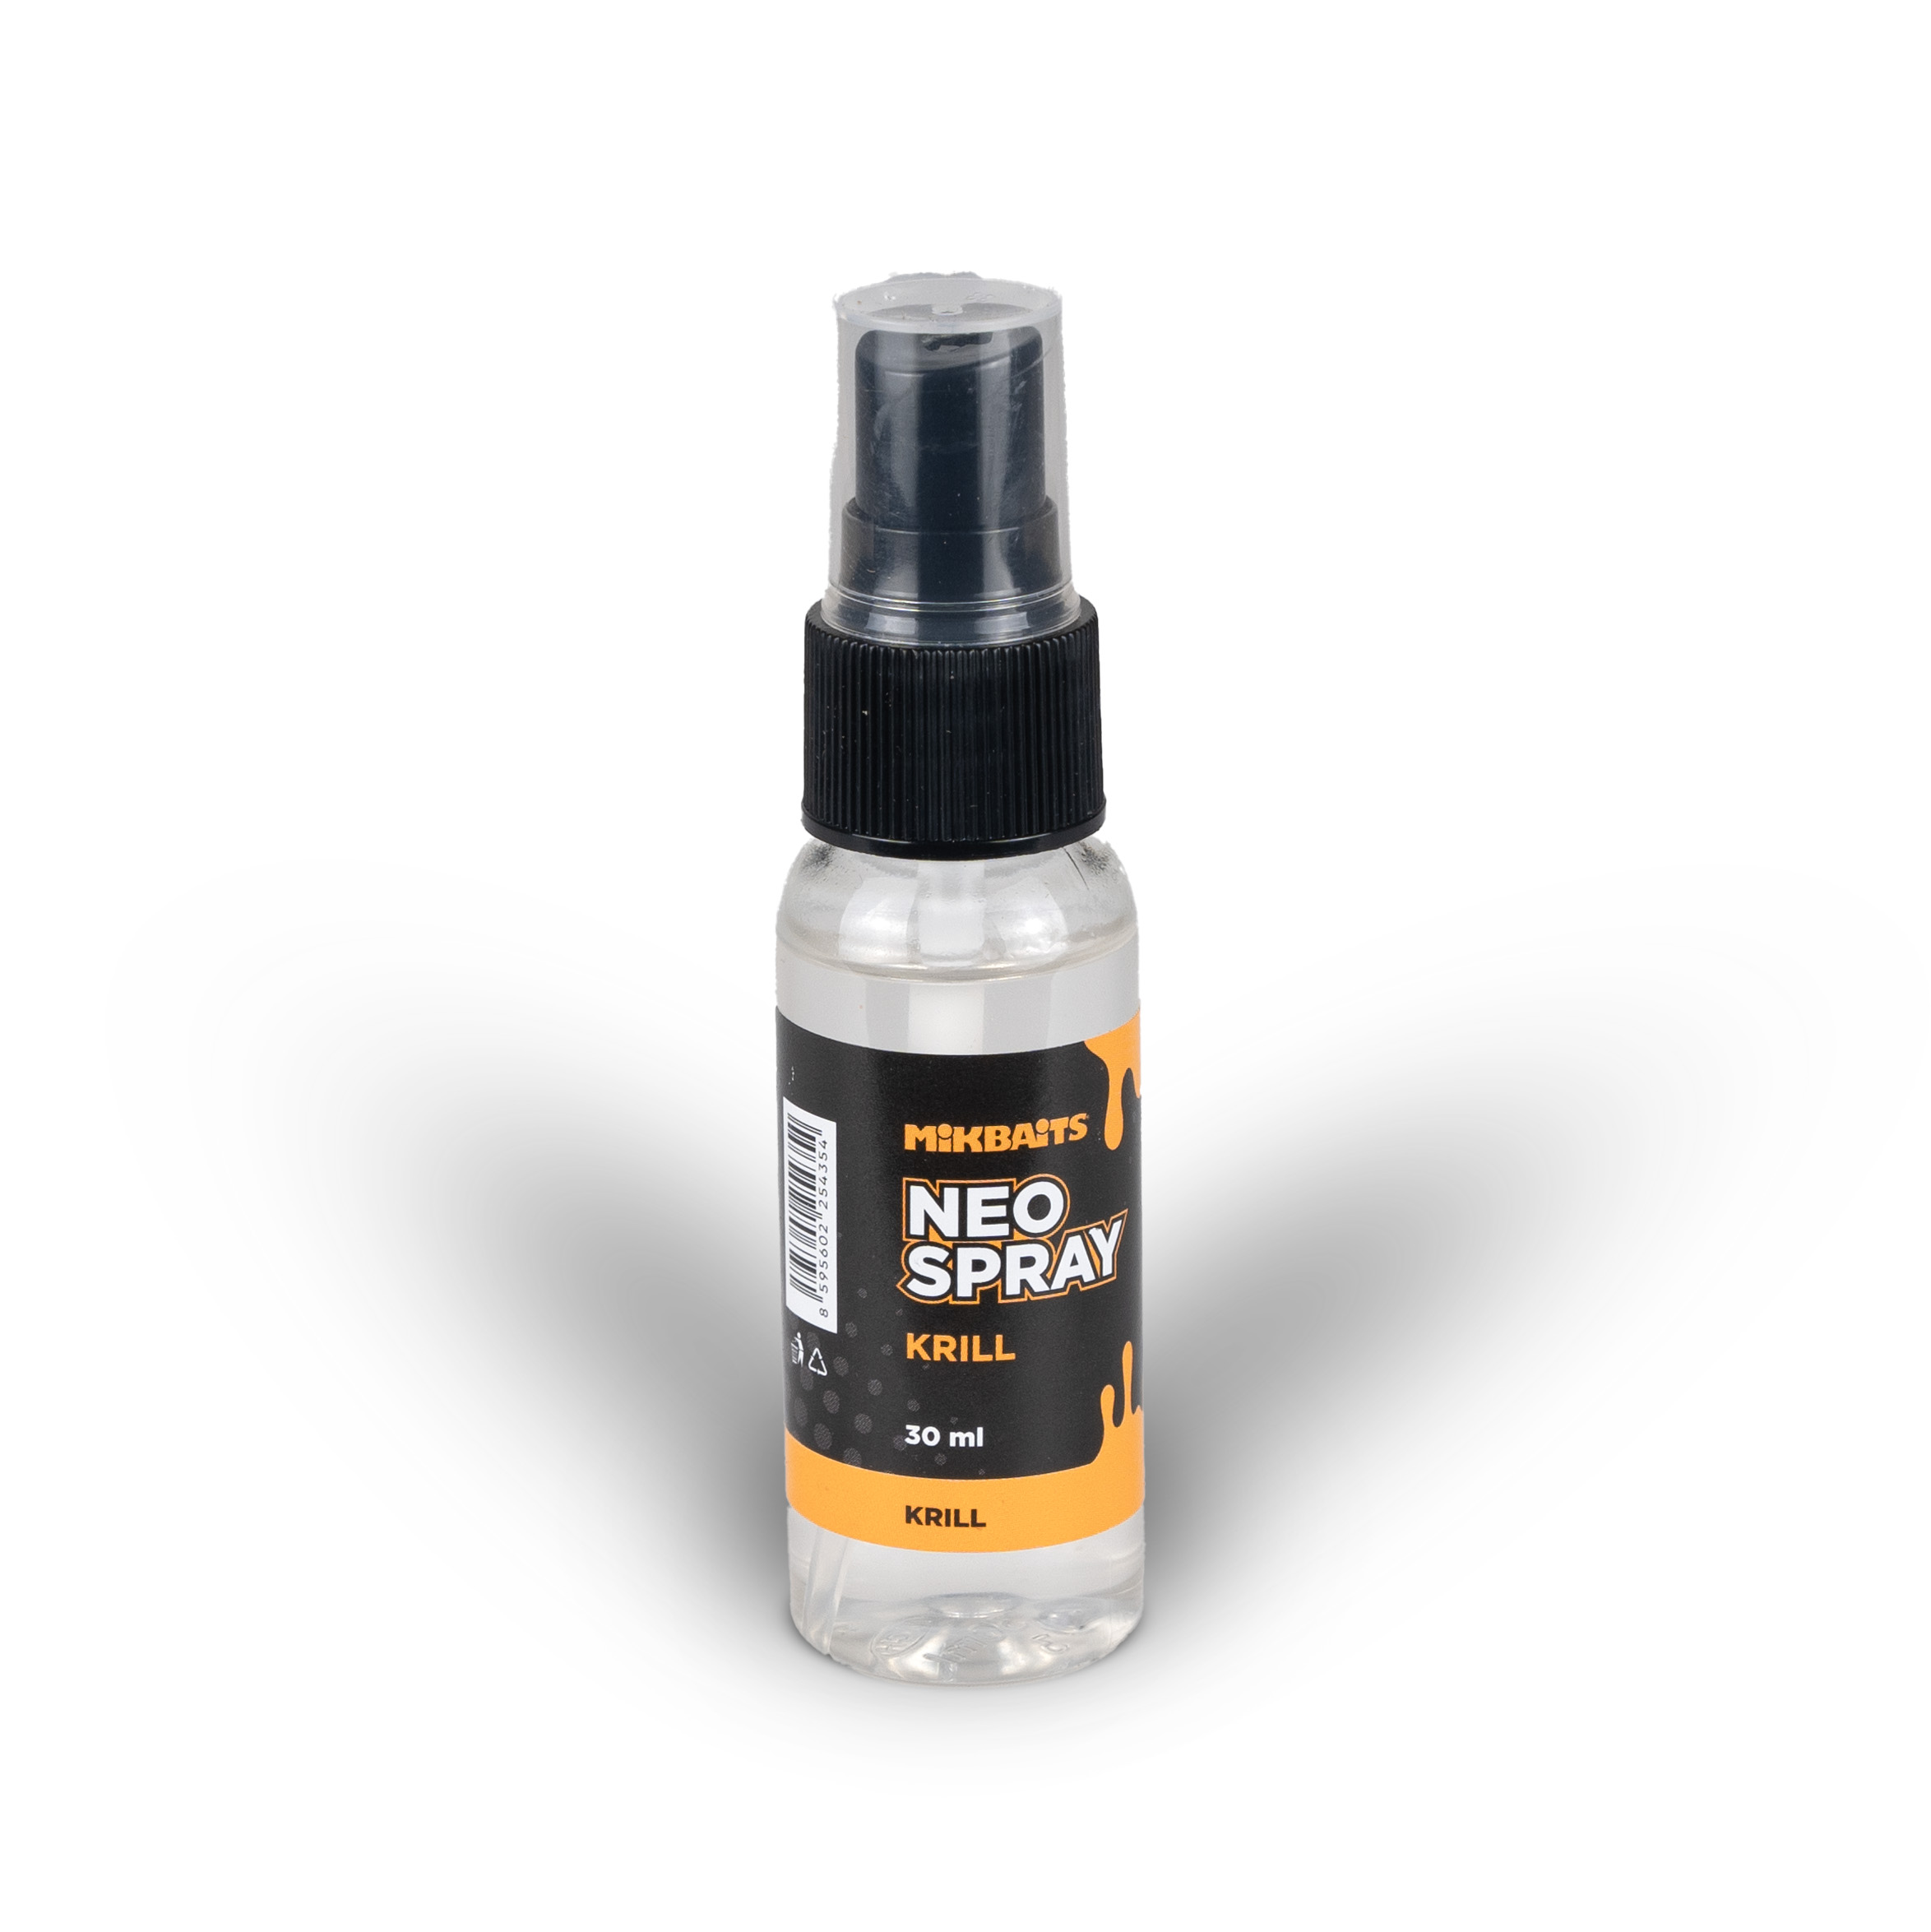 Neo spray 30ml - Krill